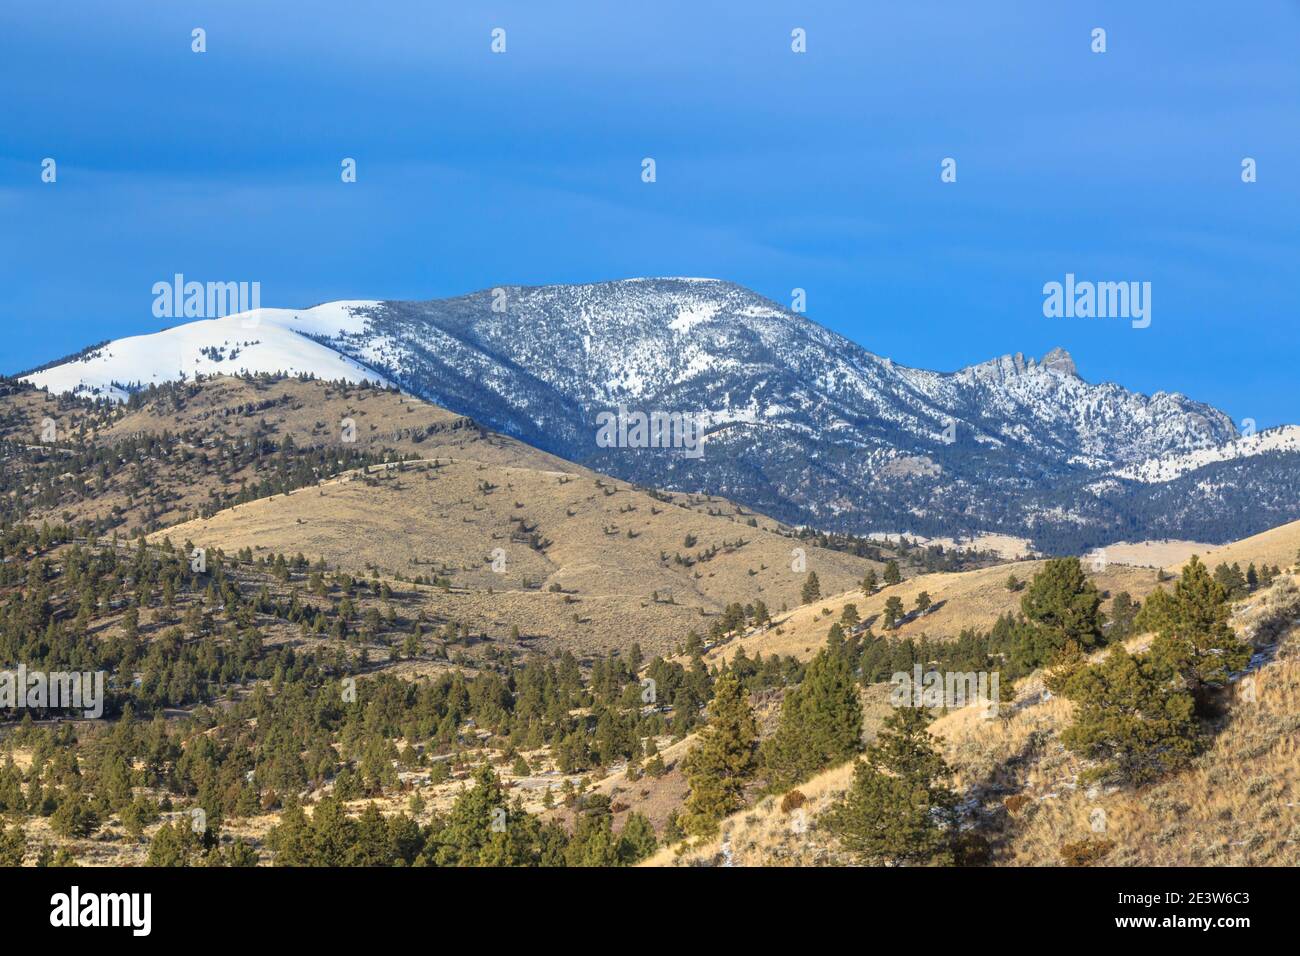 sleeping giant mountain and foothills near helena, montana Stock Photo